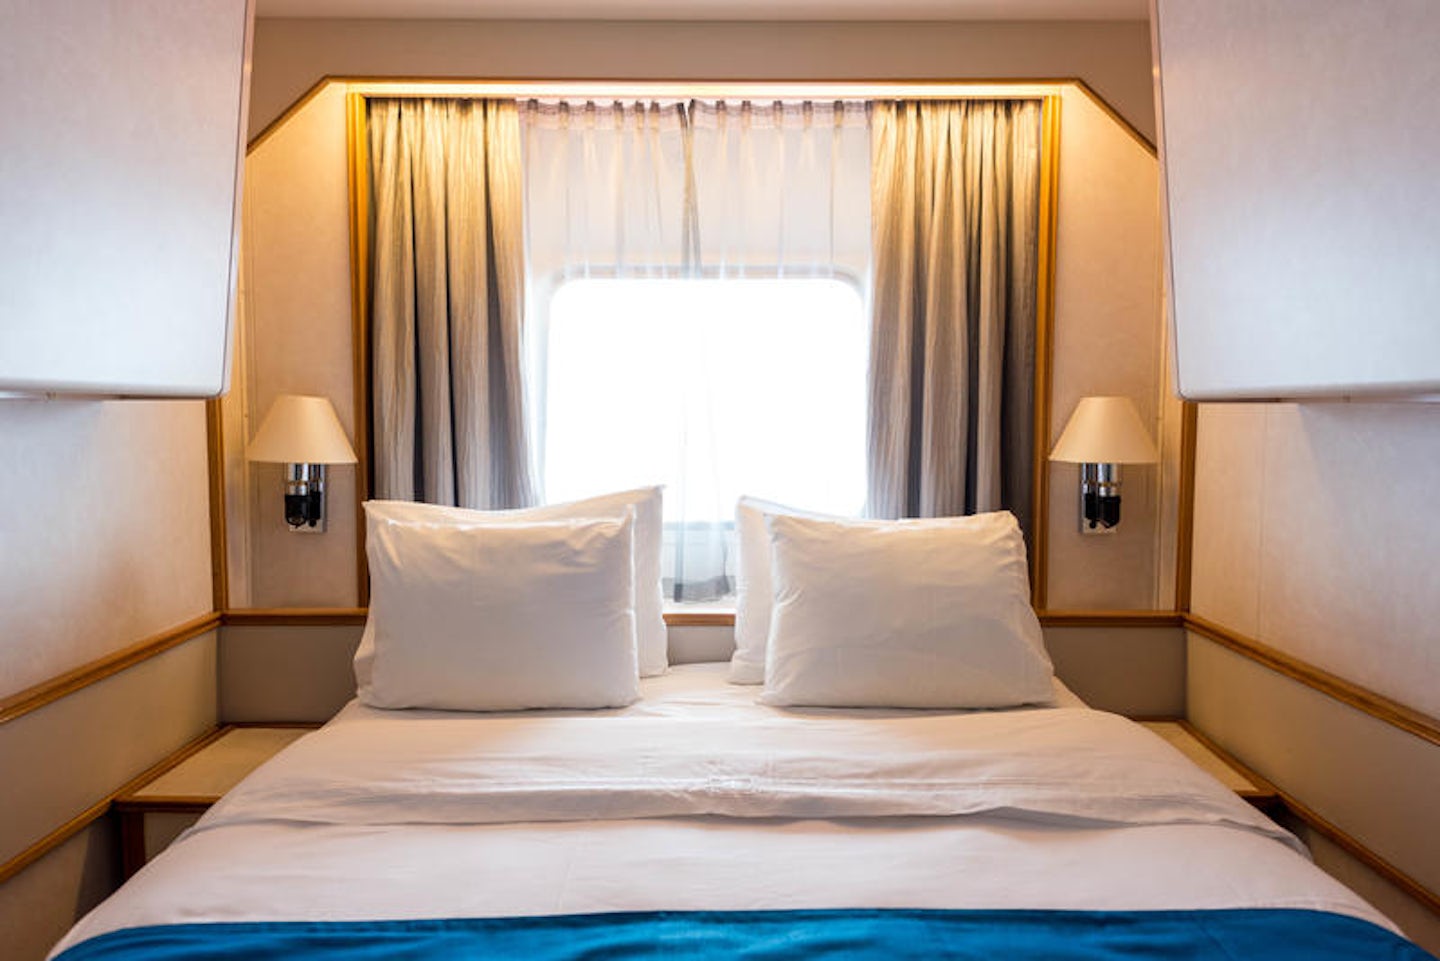 OceanView Cabin on Royal Caribbean Empress of the Seas Cruise Ship Cruise Critic